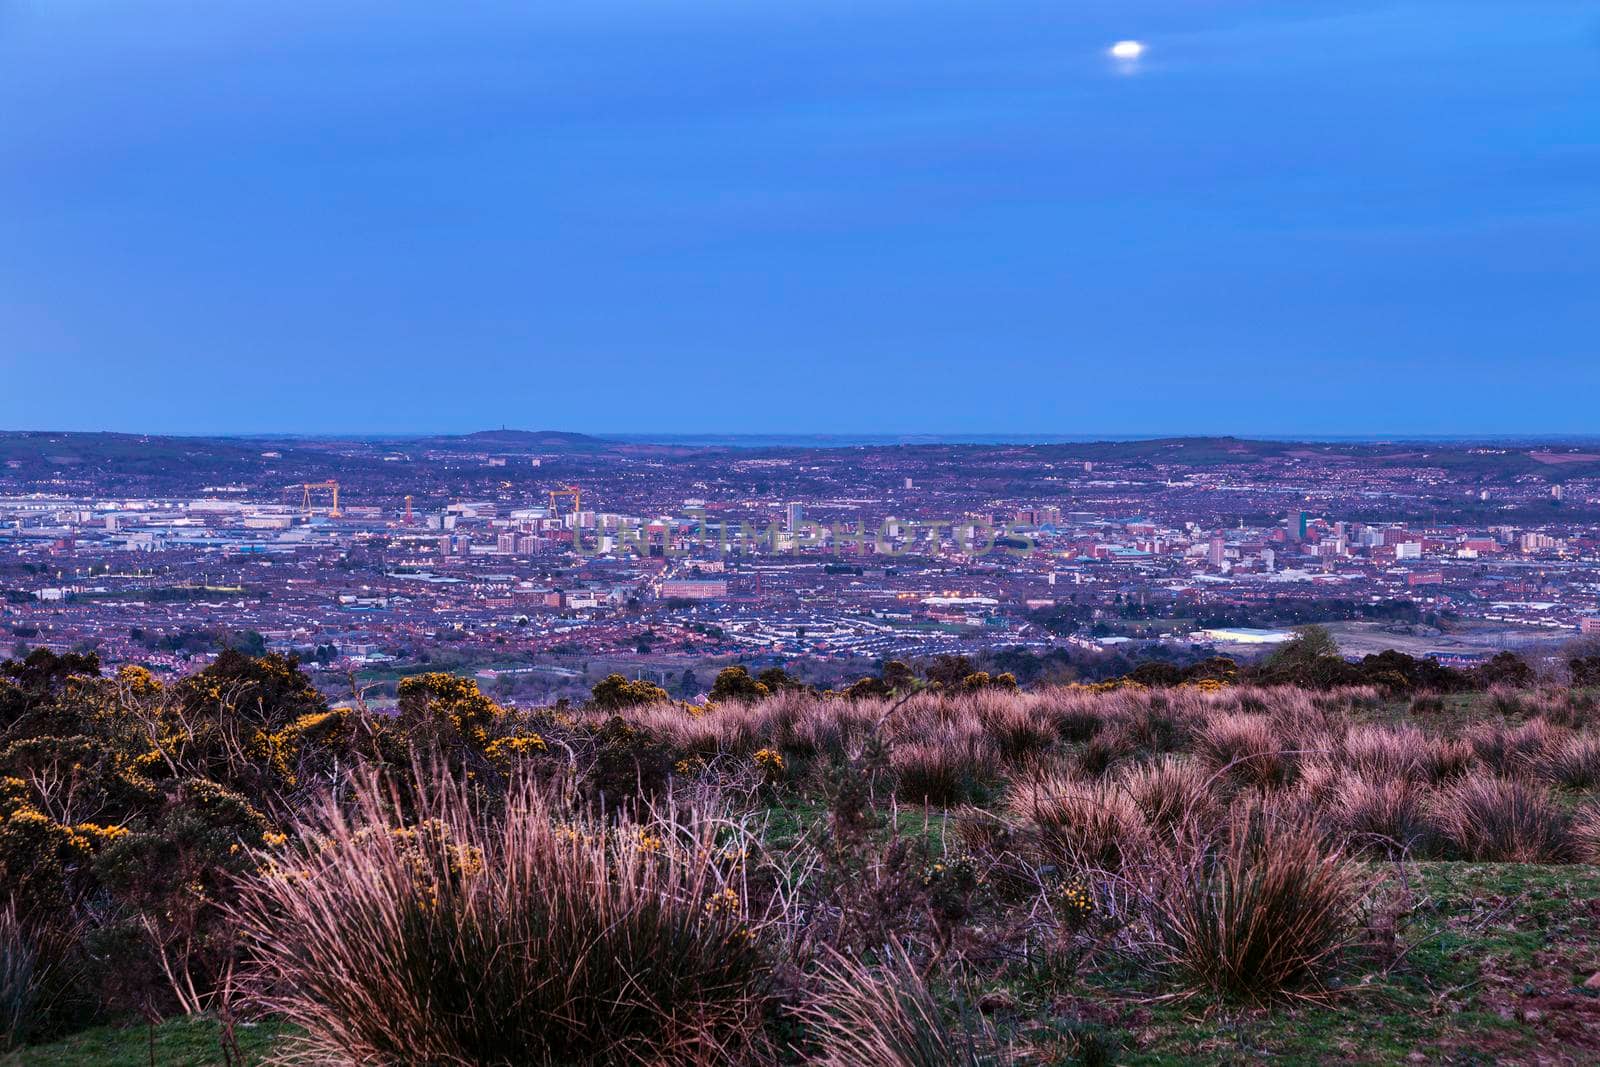 Aerial panorama of  Belfast by benkrut